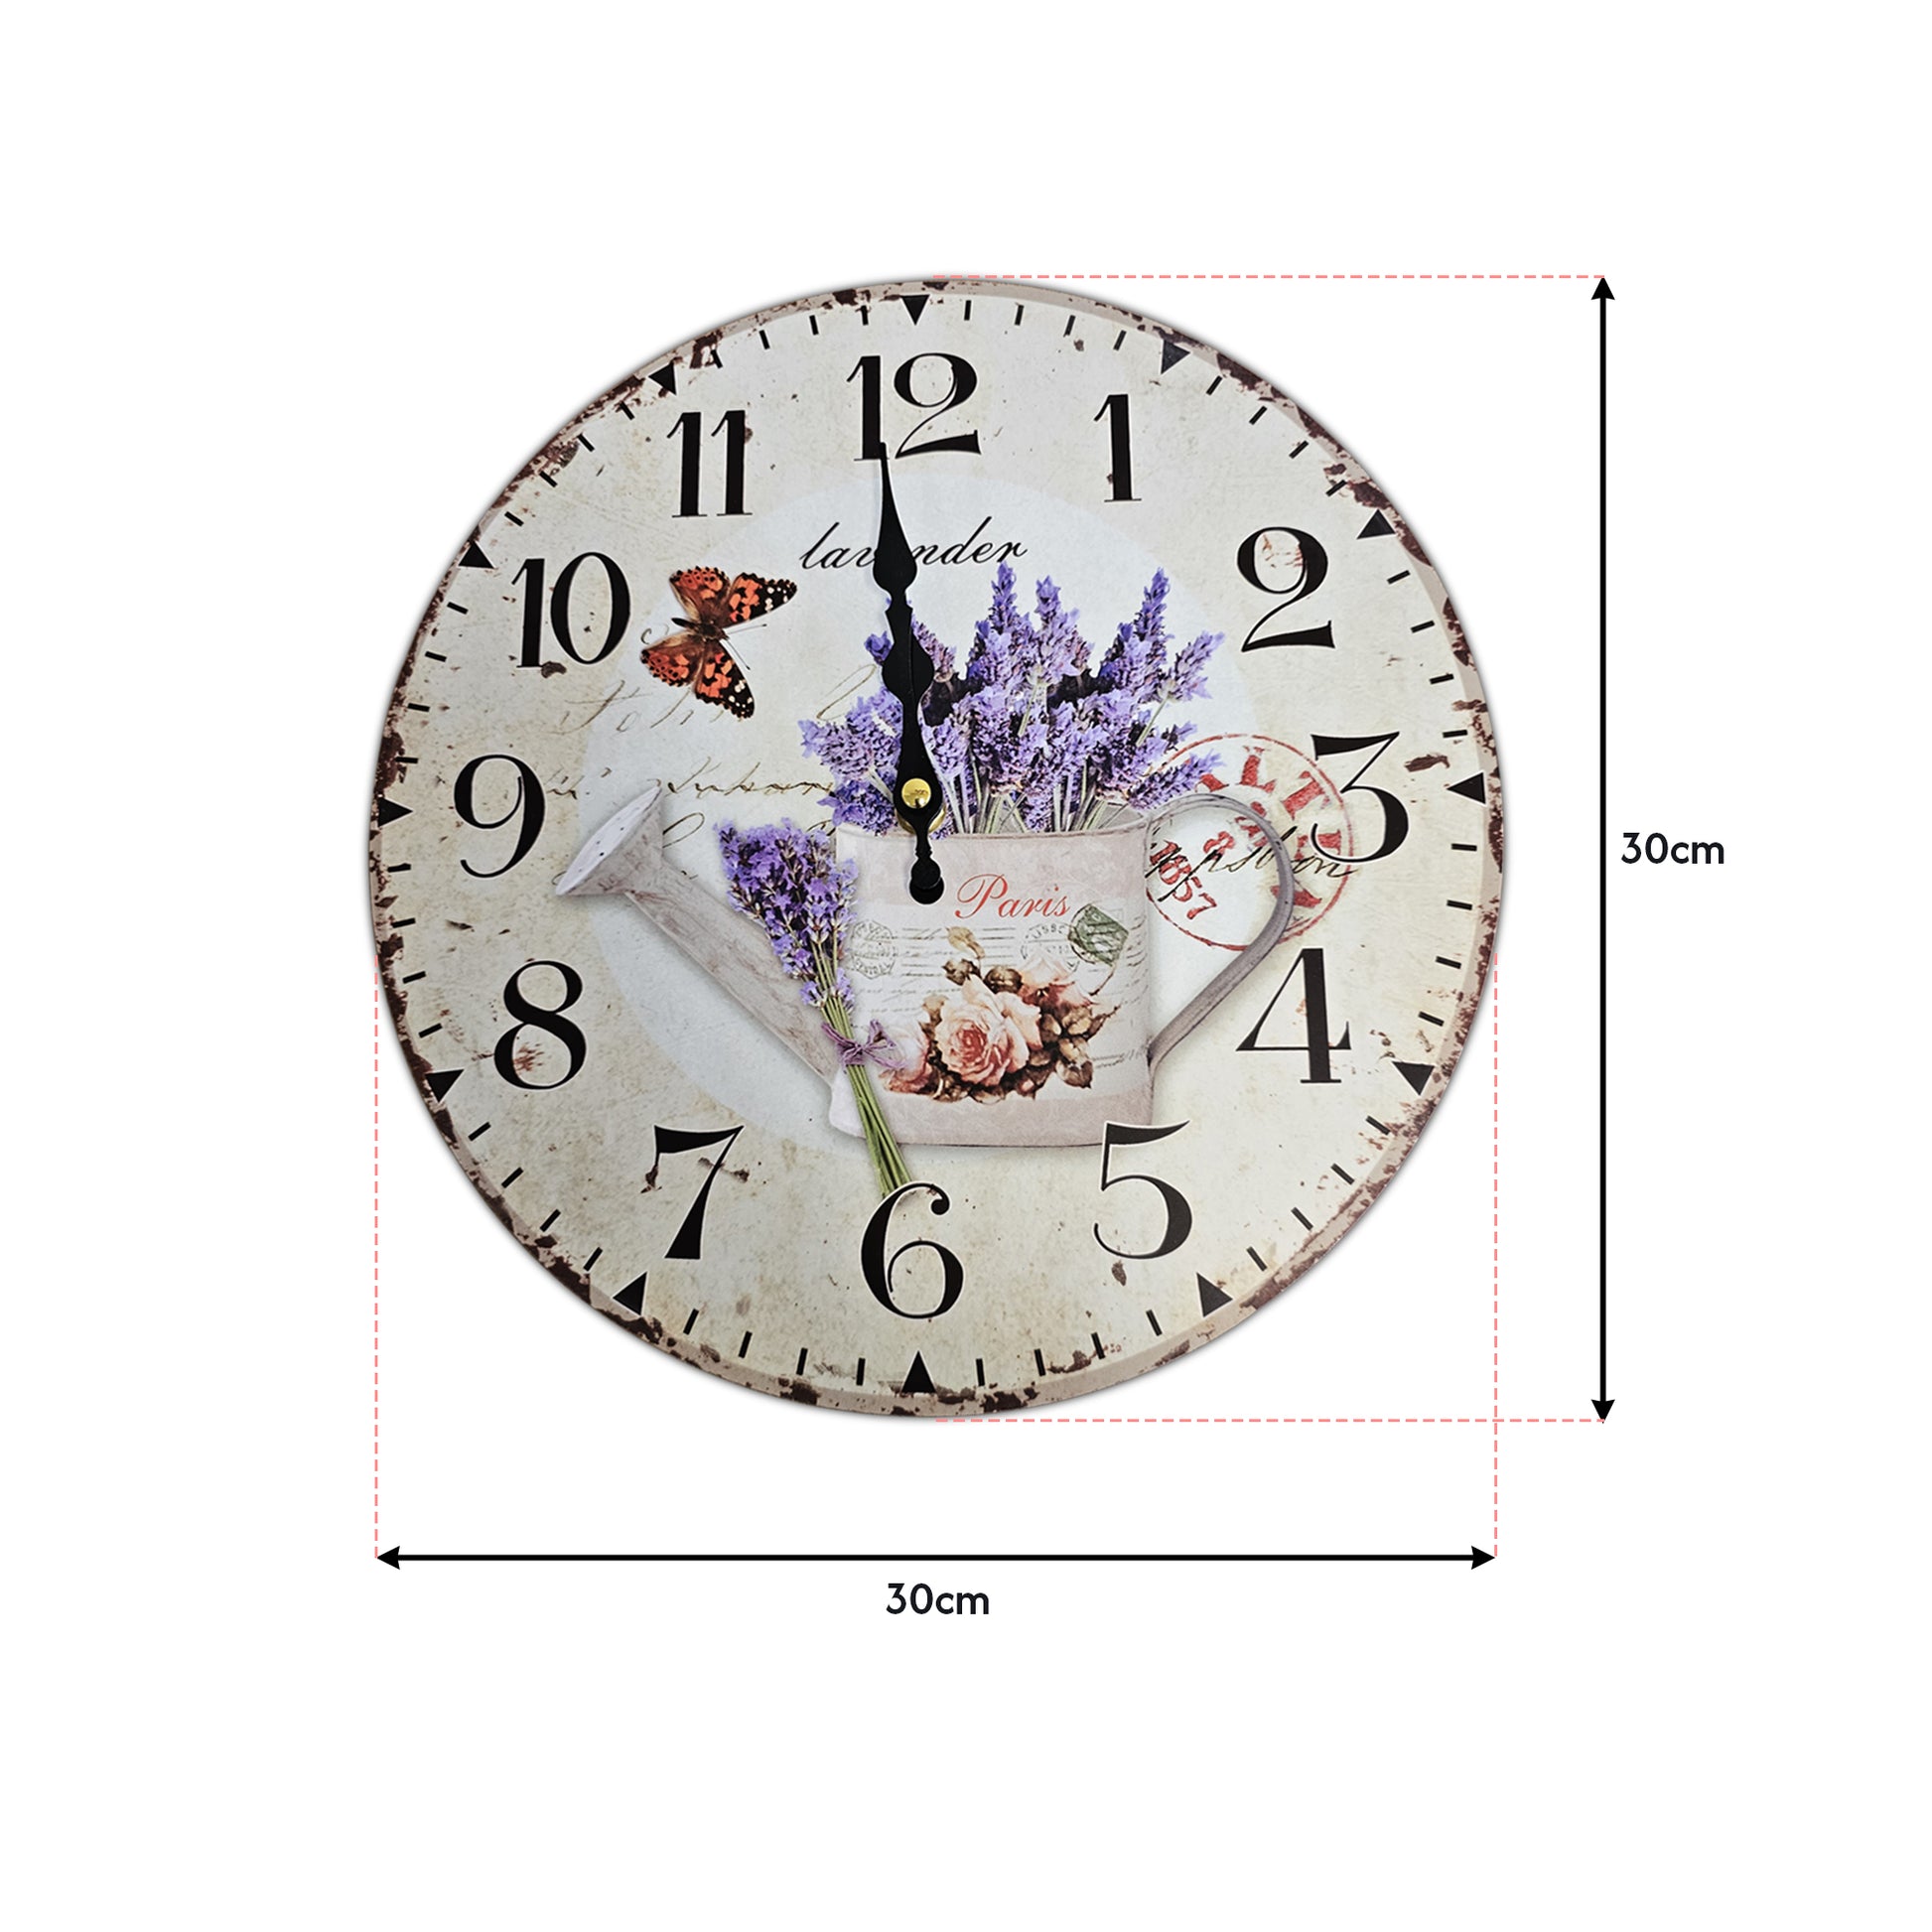 30 cm Decorative Wall Art Clock